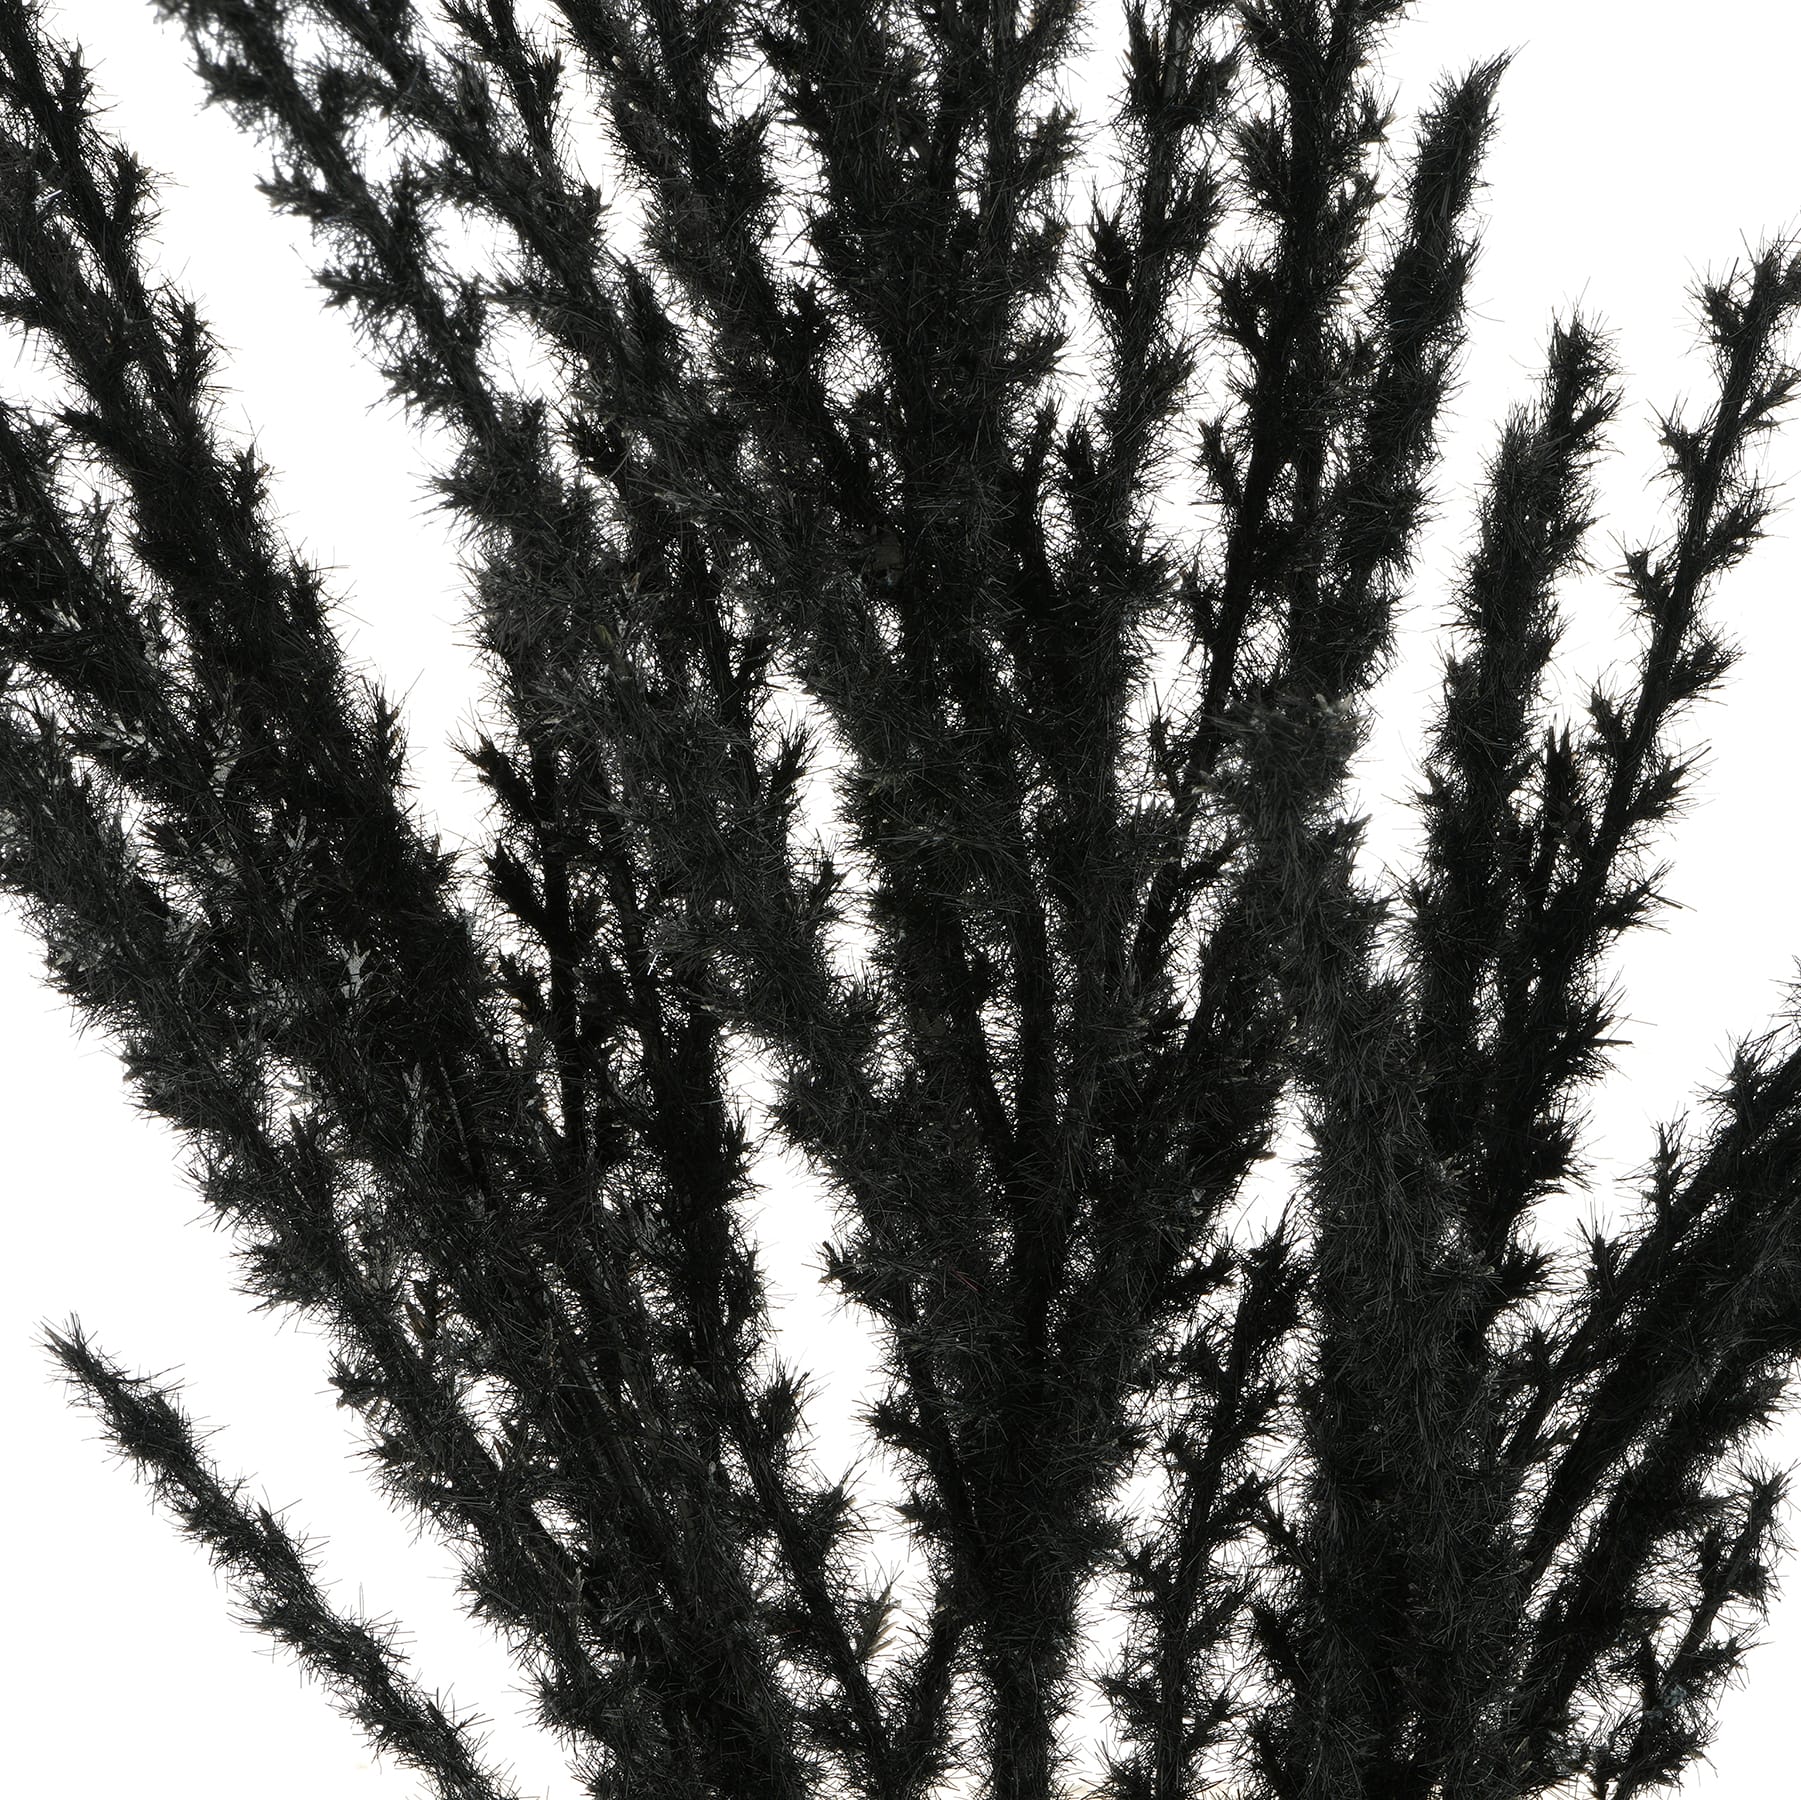 Ashland Pampas Grass Stem - Black - 31 in